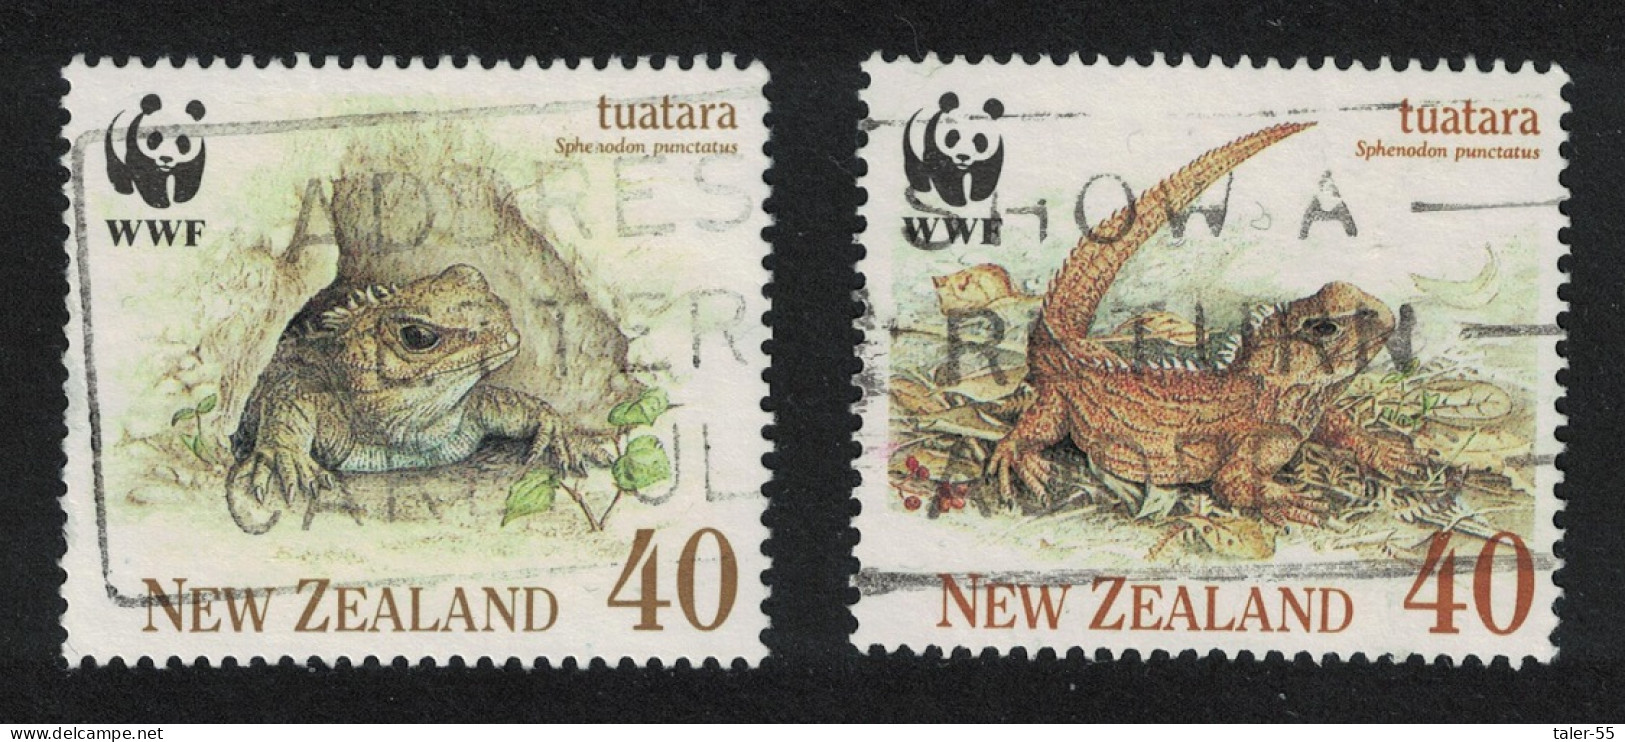 New Zealand WWF Tuatara 2V 1991 Canc SG#1590-1593 MI#1160-1163 Sc#1023-1026 - Usati